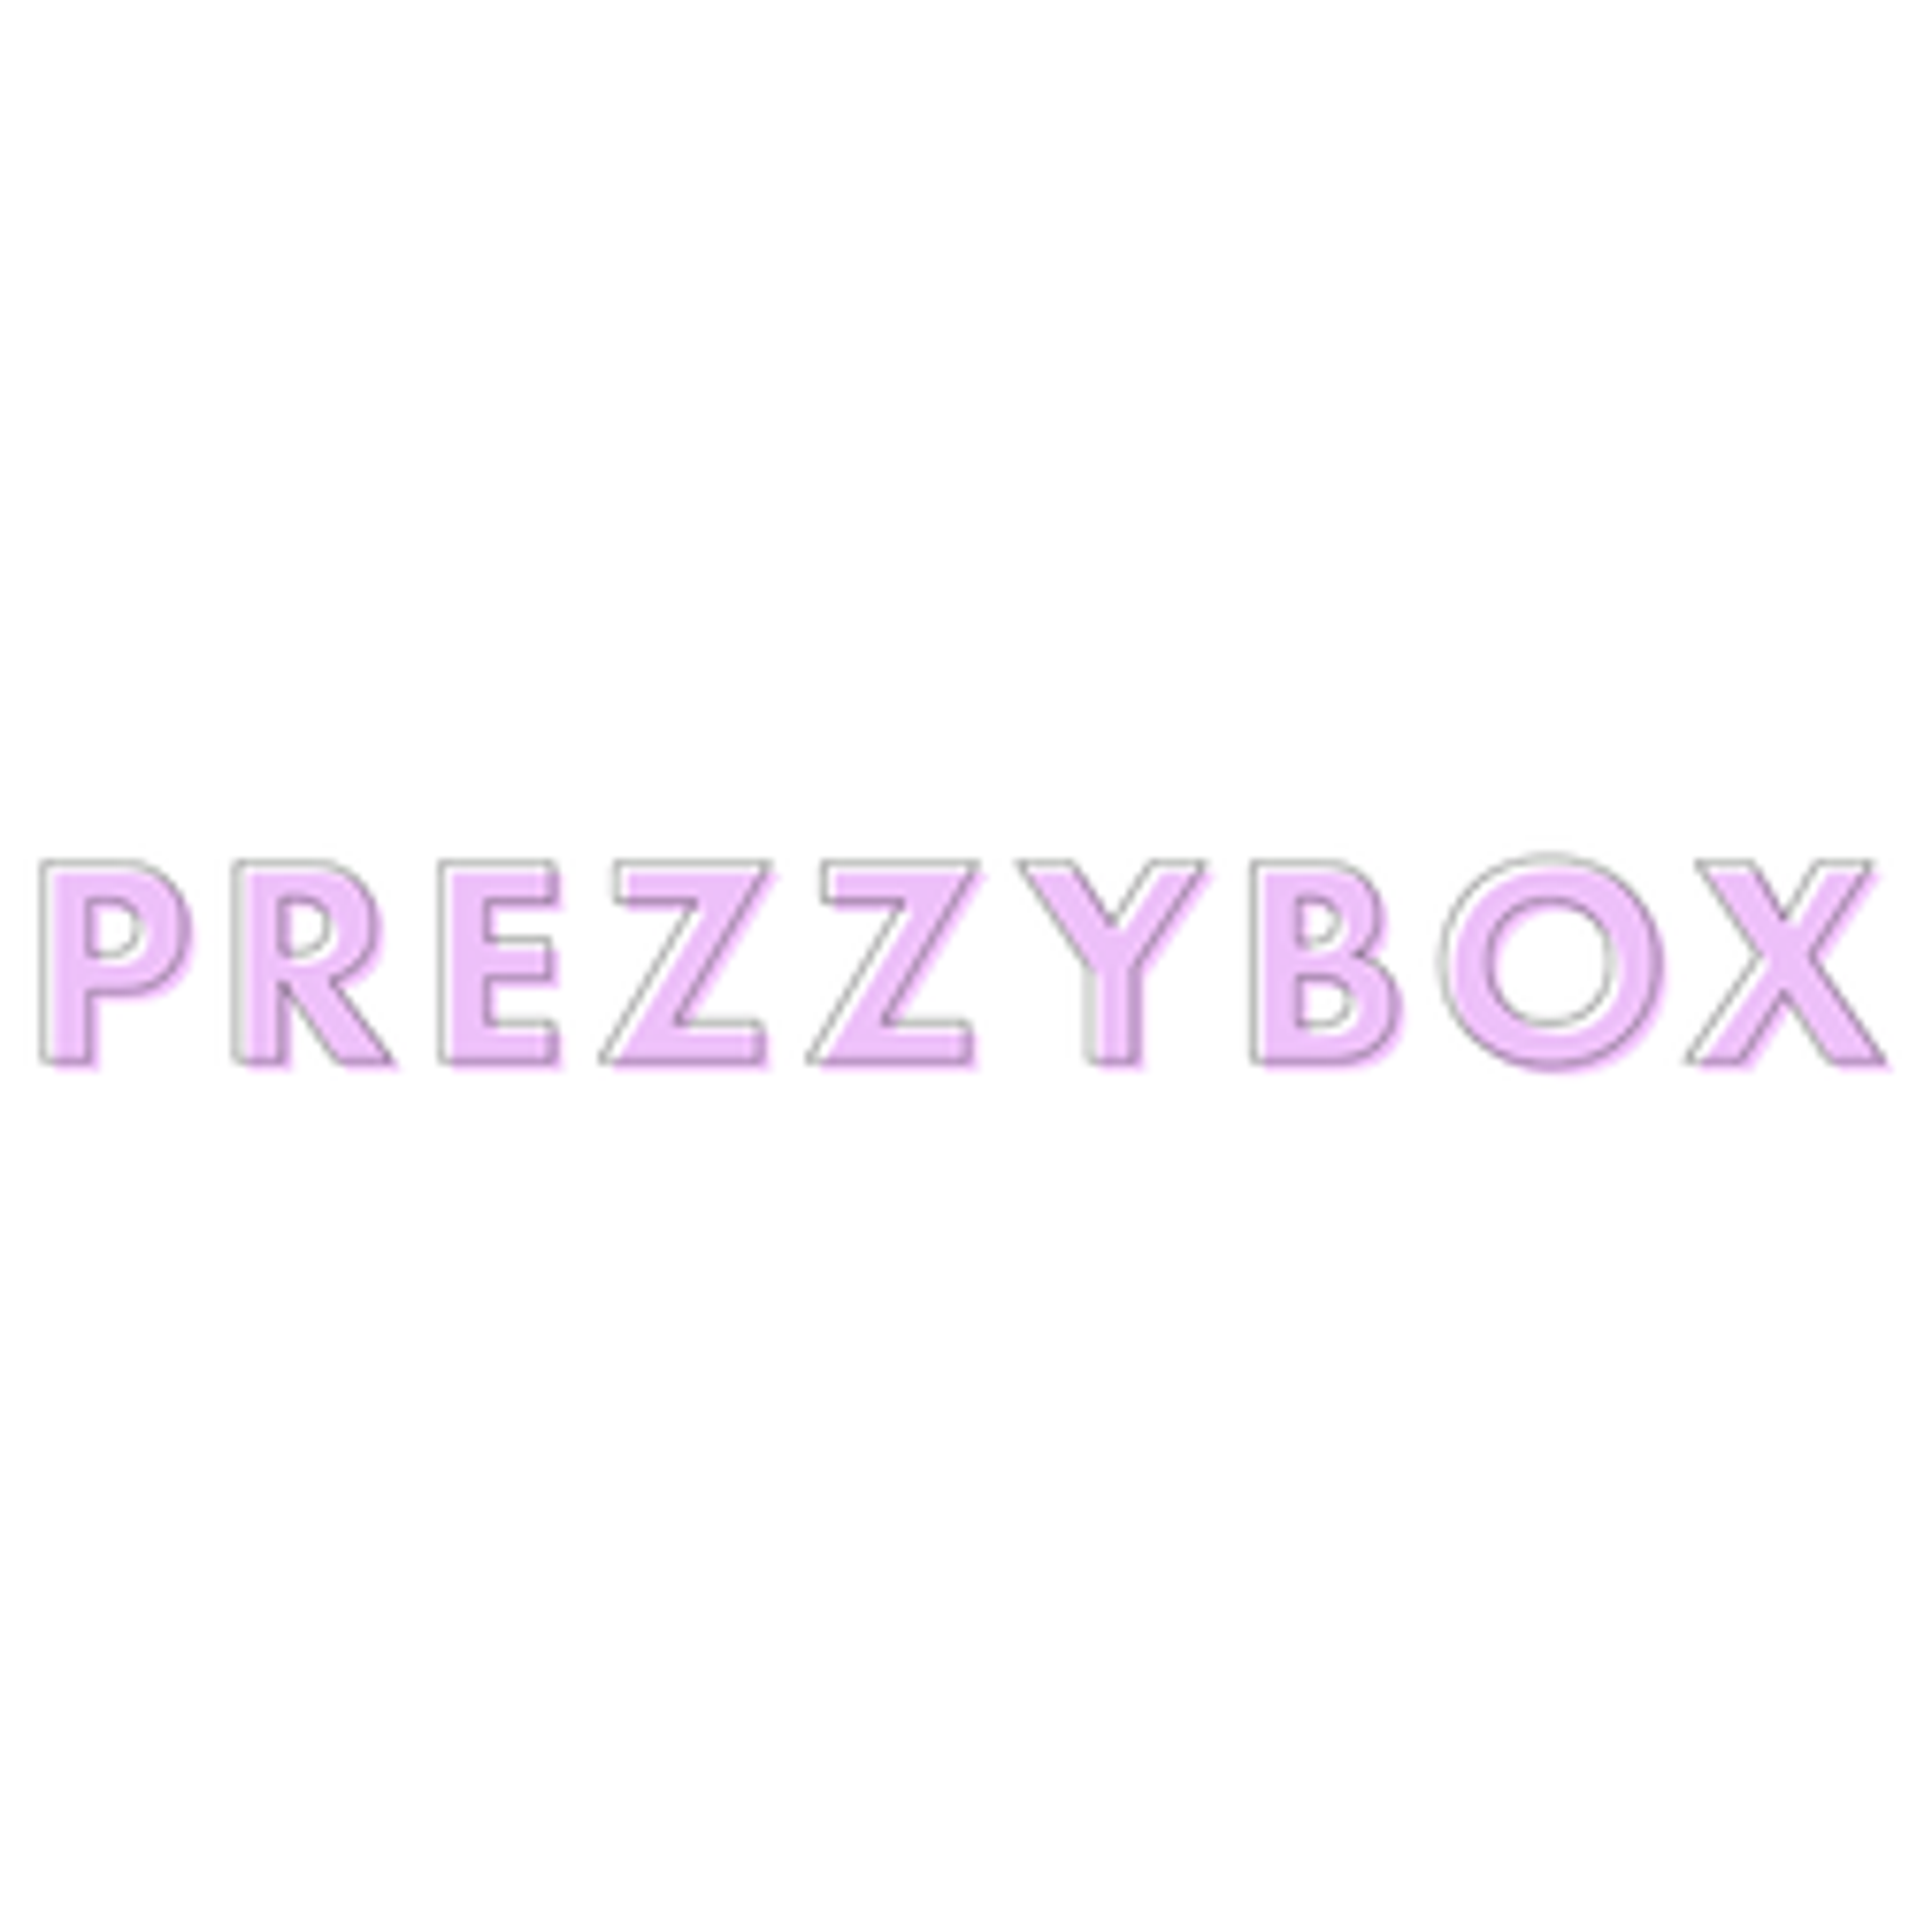  Prezzybox 